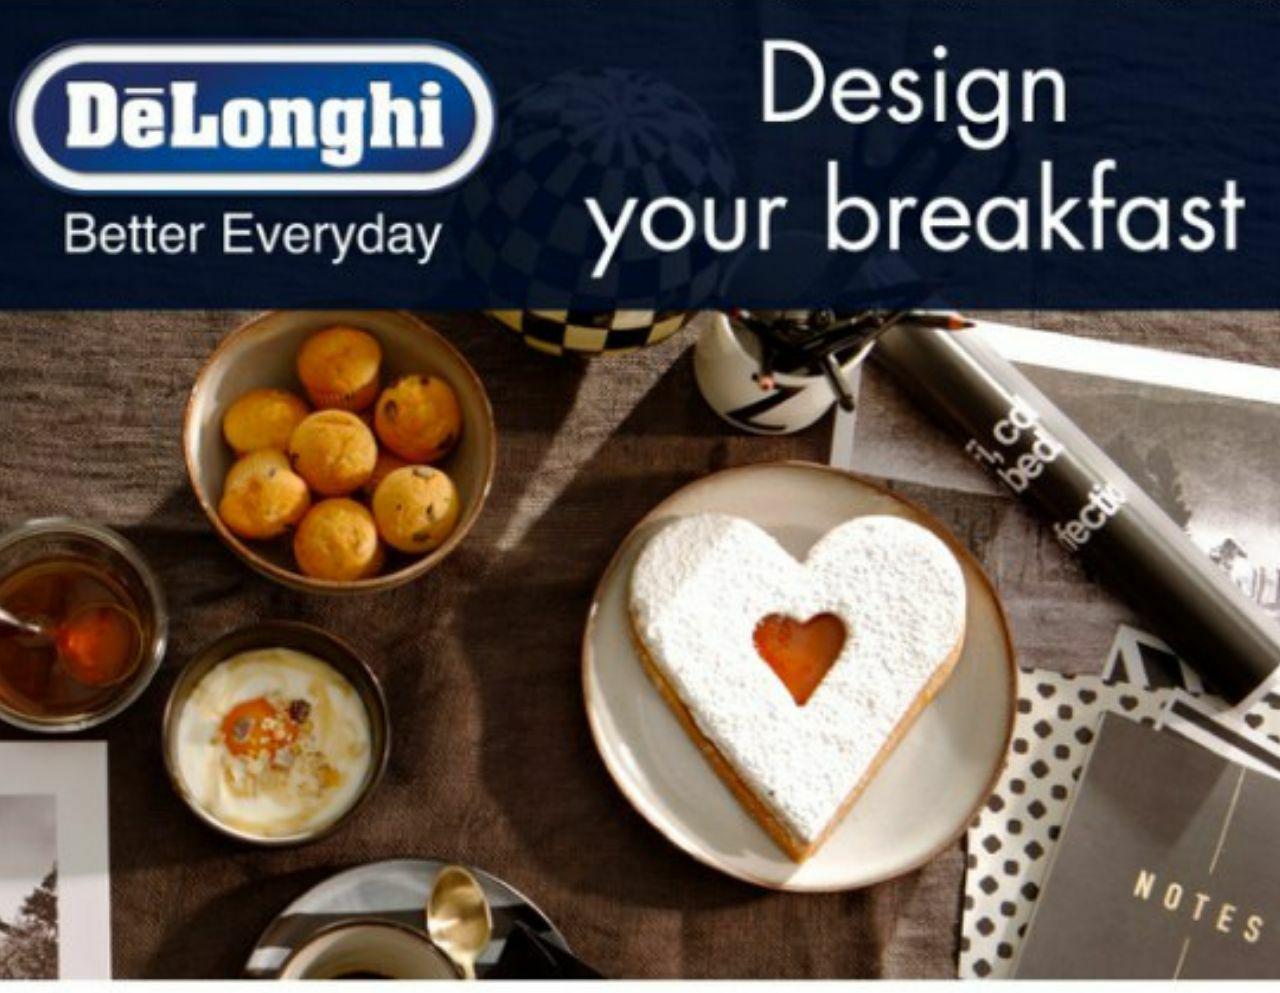 De’Longhi Design Your Breakfast - International call for entries